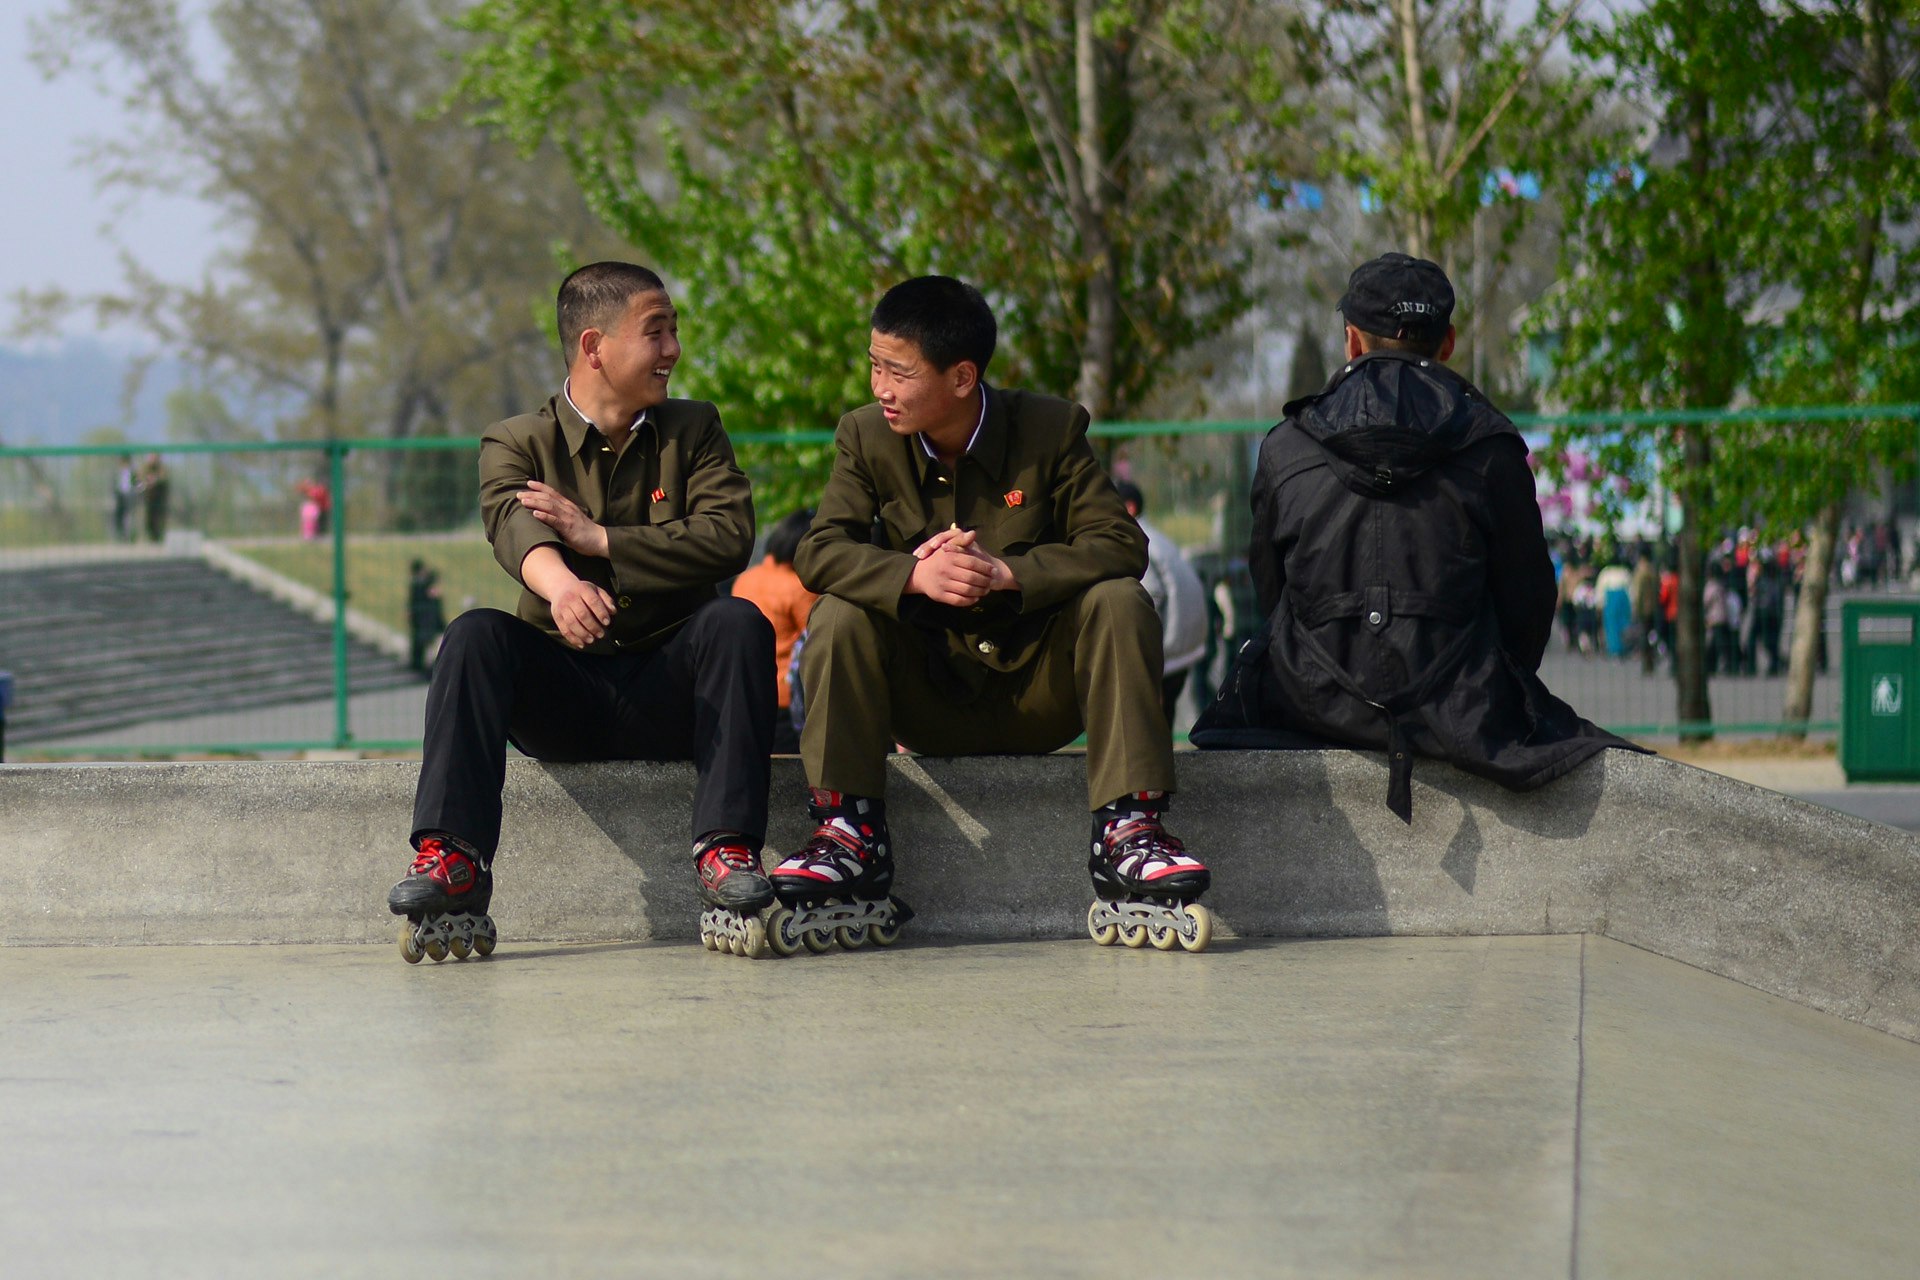 North Korean teenagers chat at a skate park.